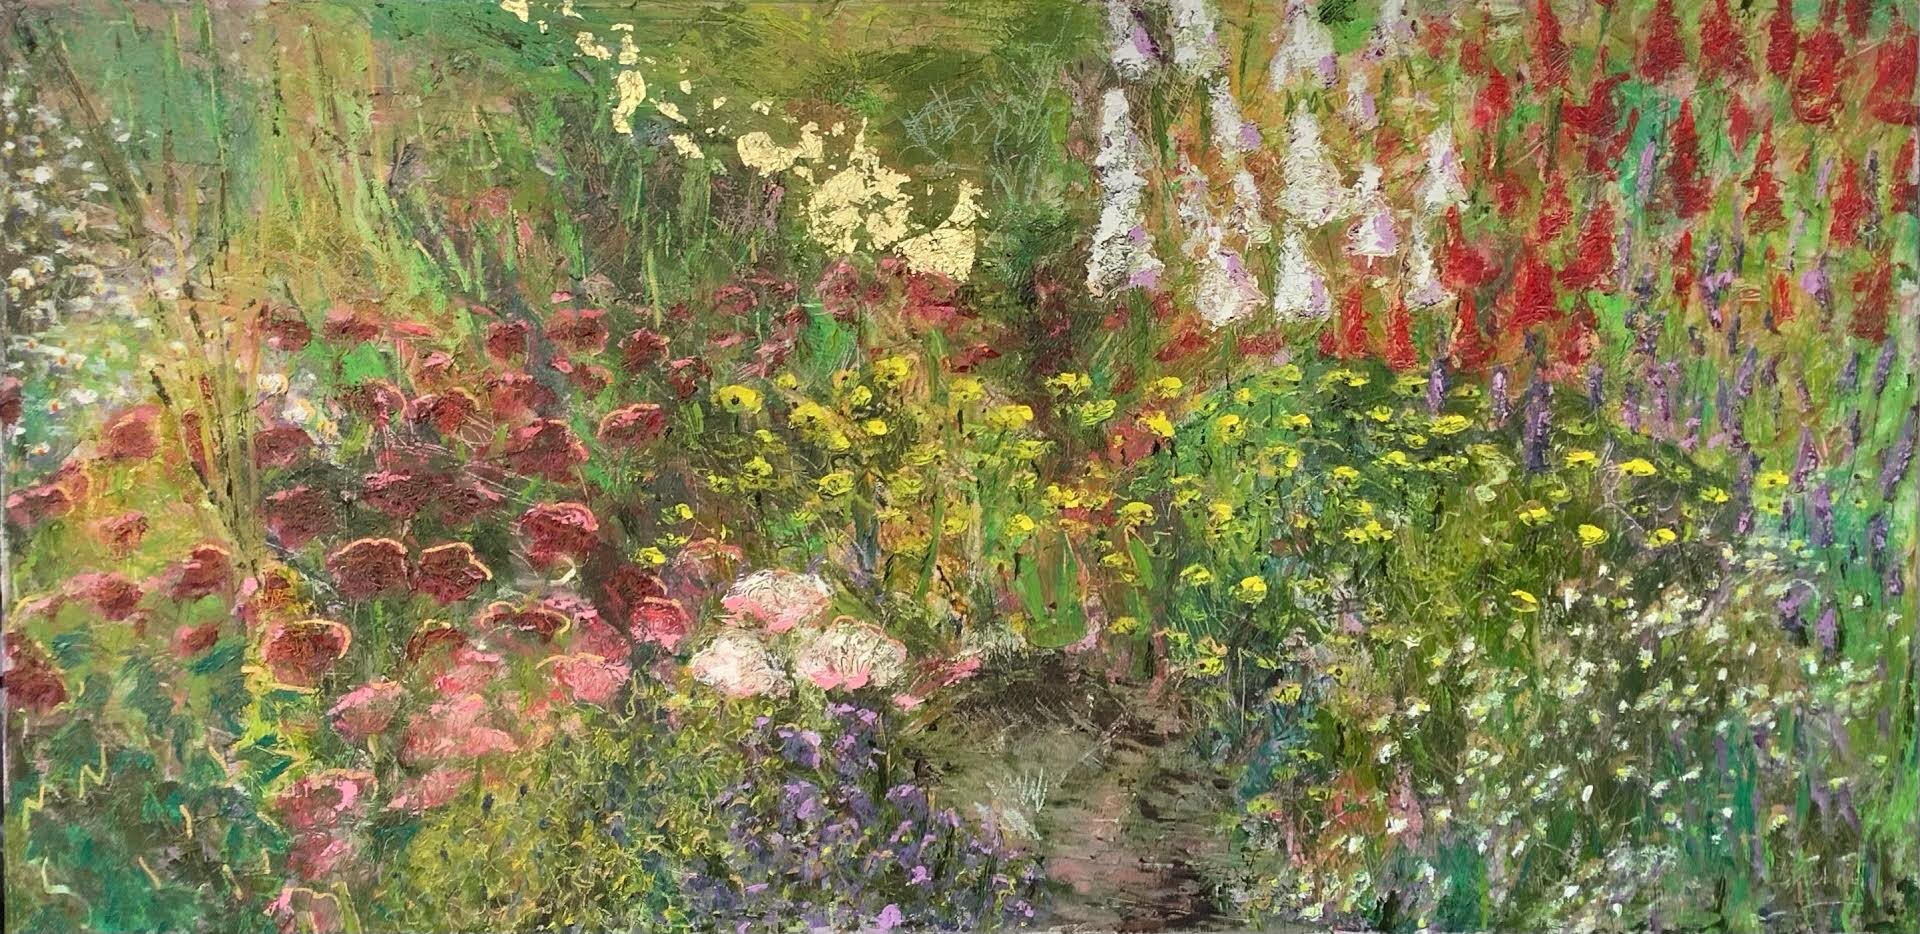 Vonnegut's Garden 48"x24" mixed media on canvas